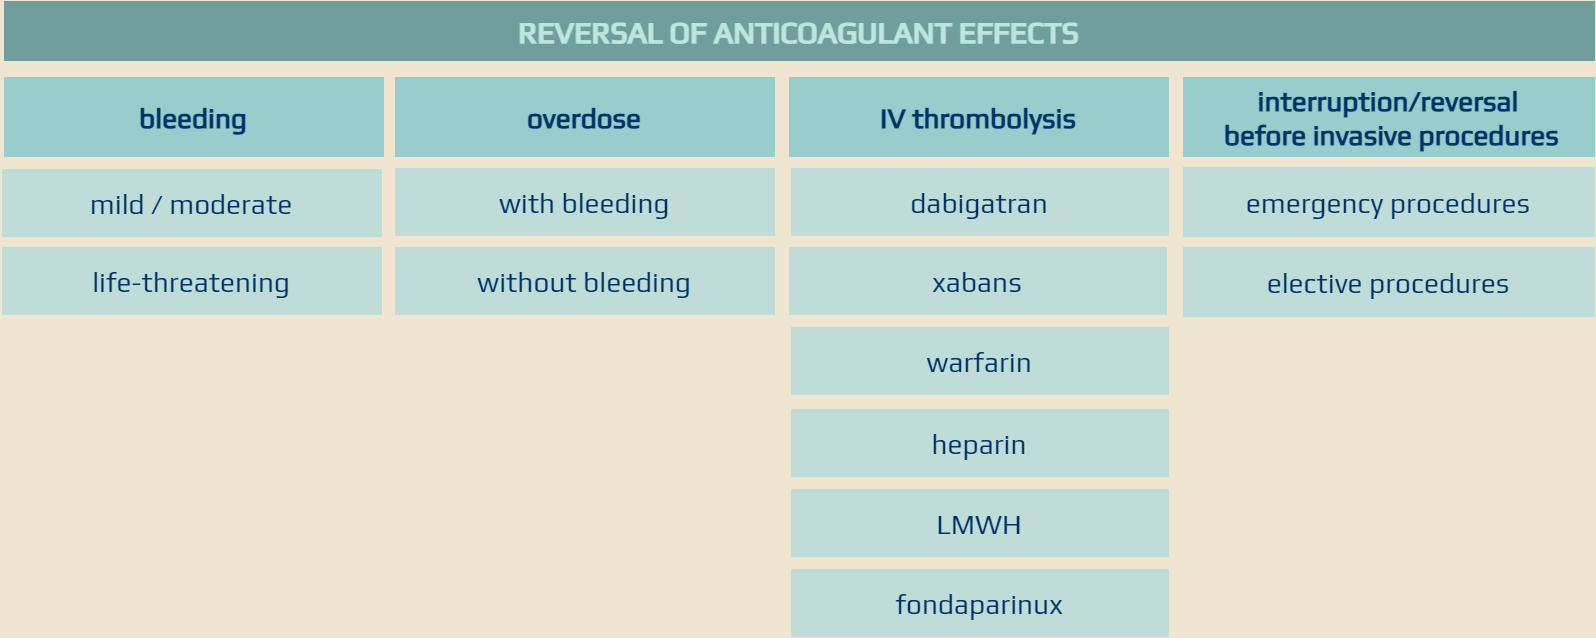 Neutralization of the anticoagulant effects